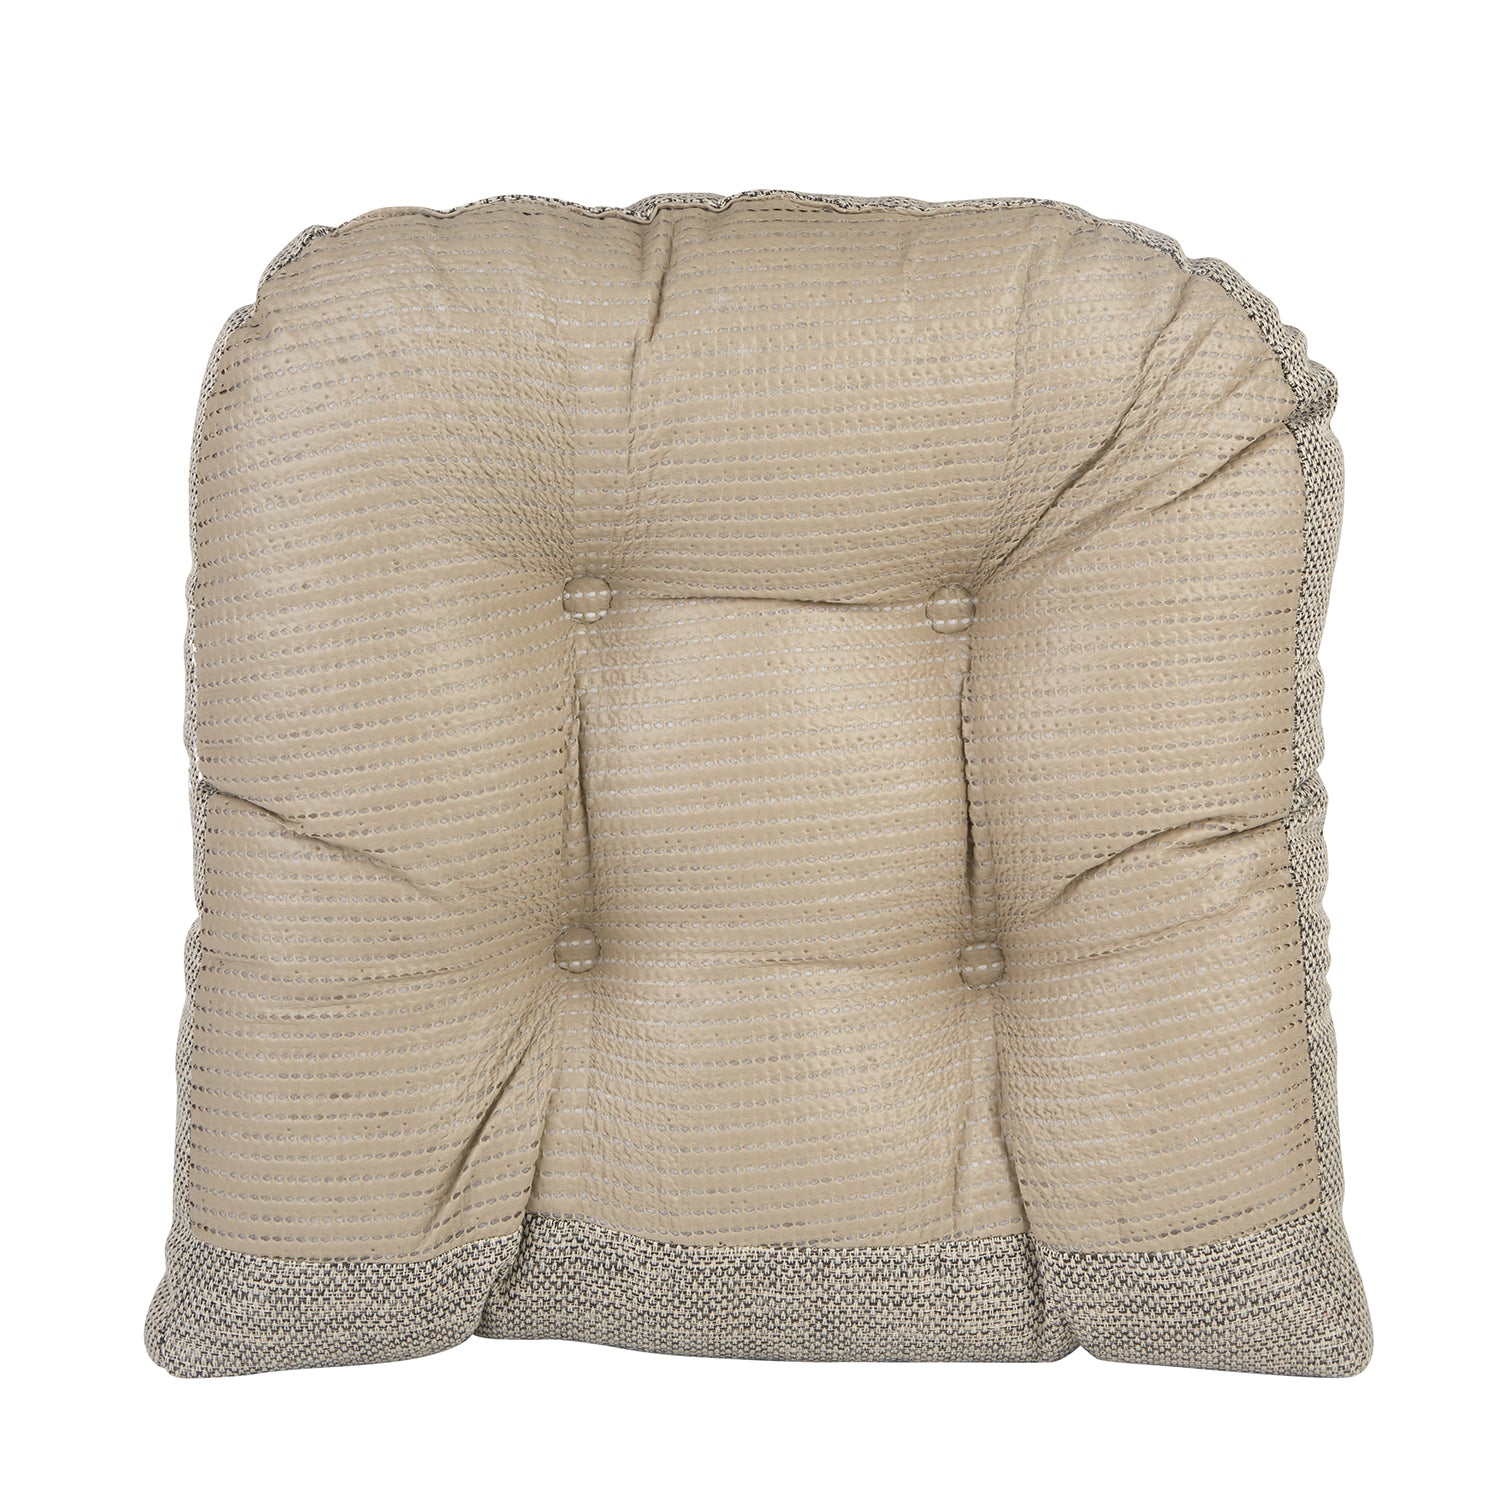 Car Seat Cushion Premium Flannel Fabric Soft and Non-Slip Seat